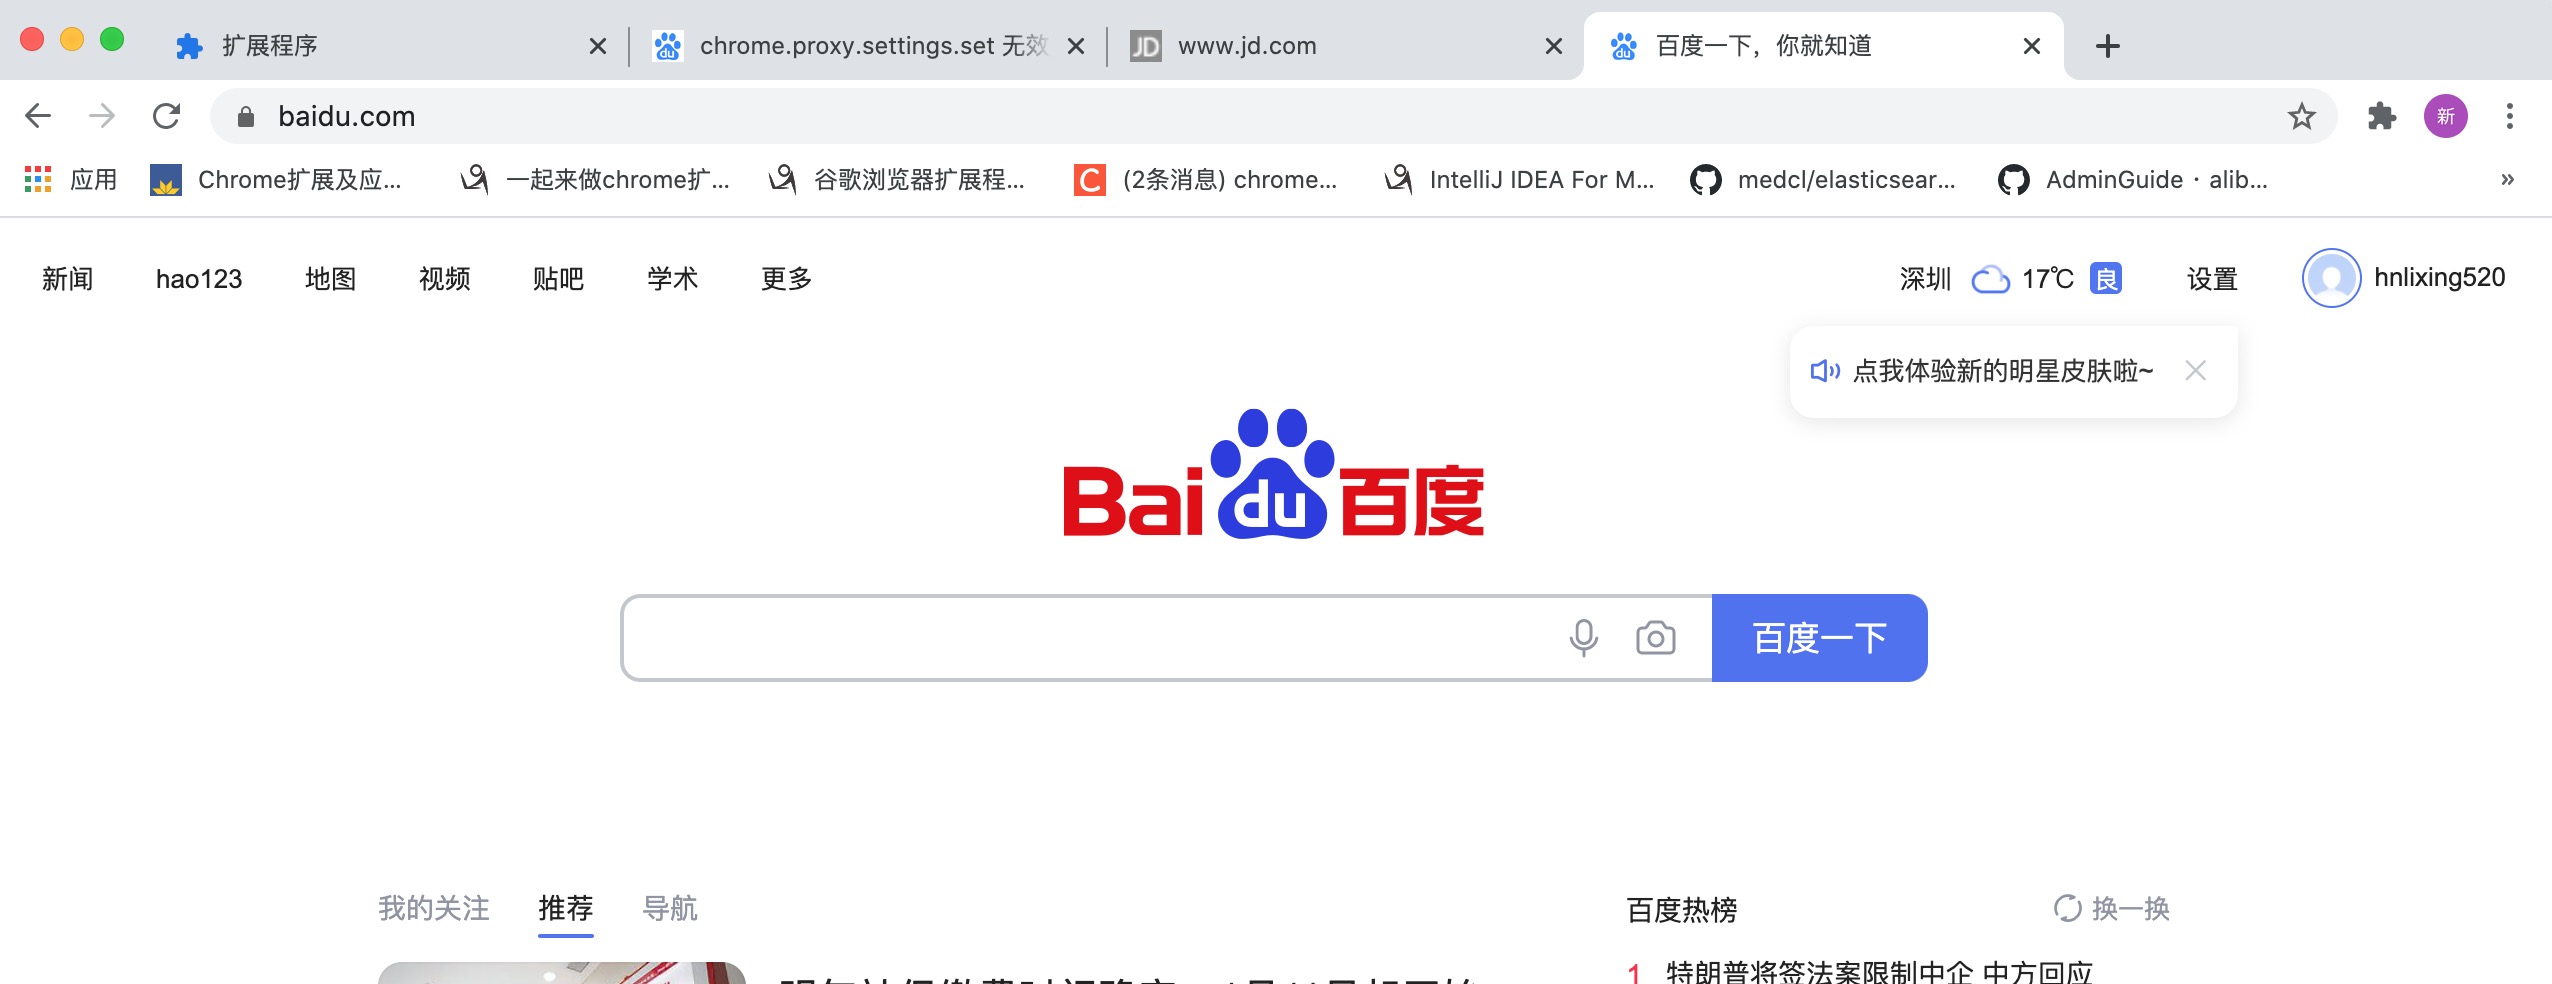 "Chrome Proxy Baidu Success"